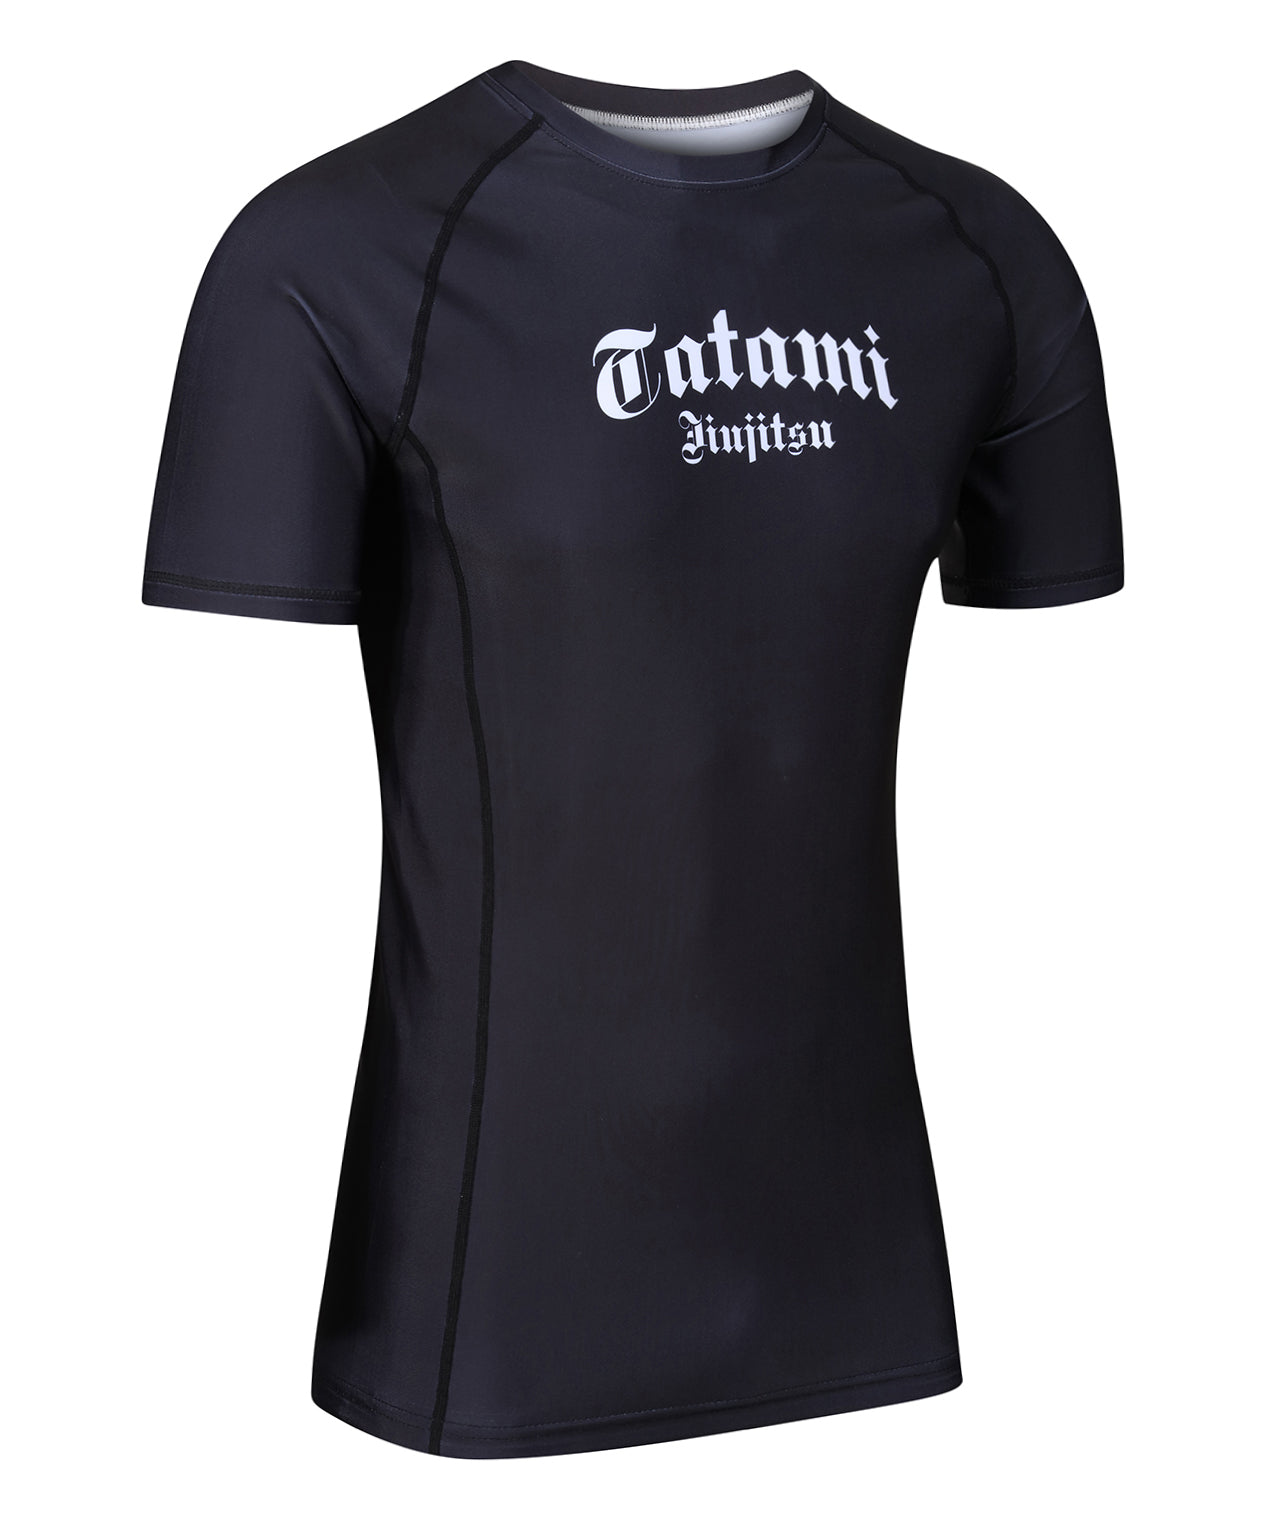 Tatami Gothic Short Sleeve Rashguard